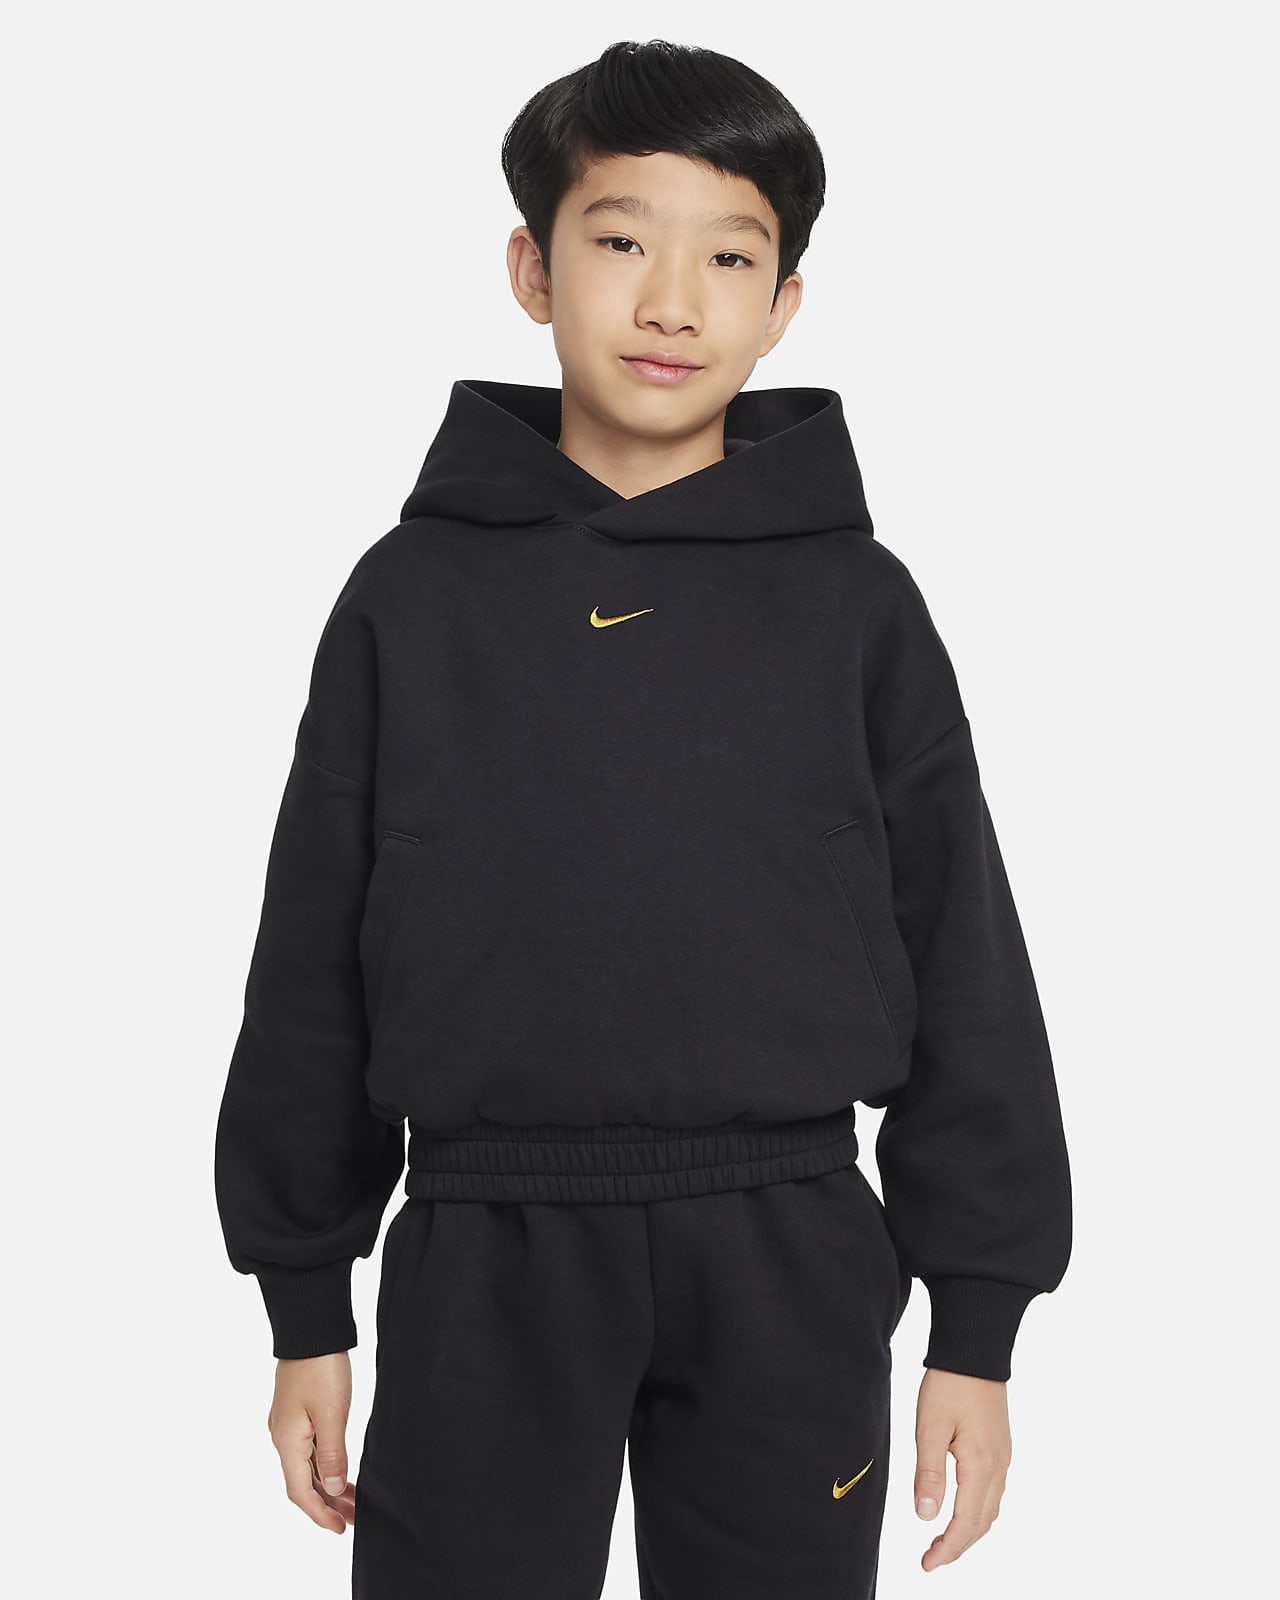 Nike Culture of Basketball Older Kids' Oversized Pullover Basketball Hoodie